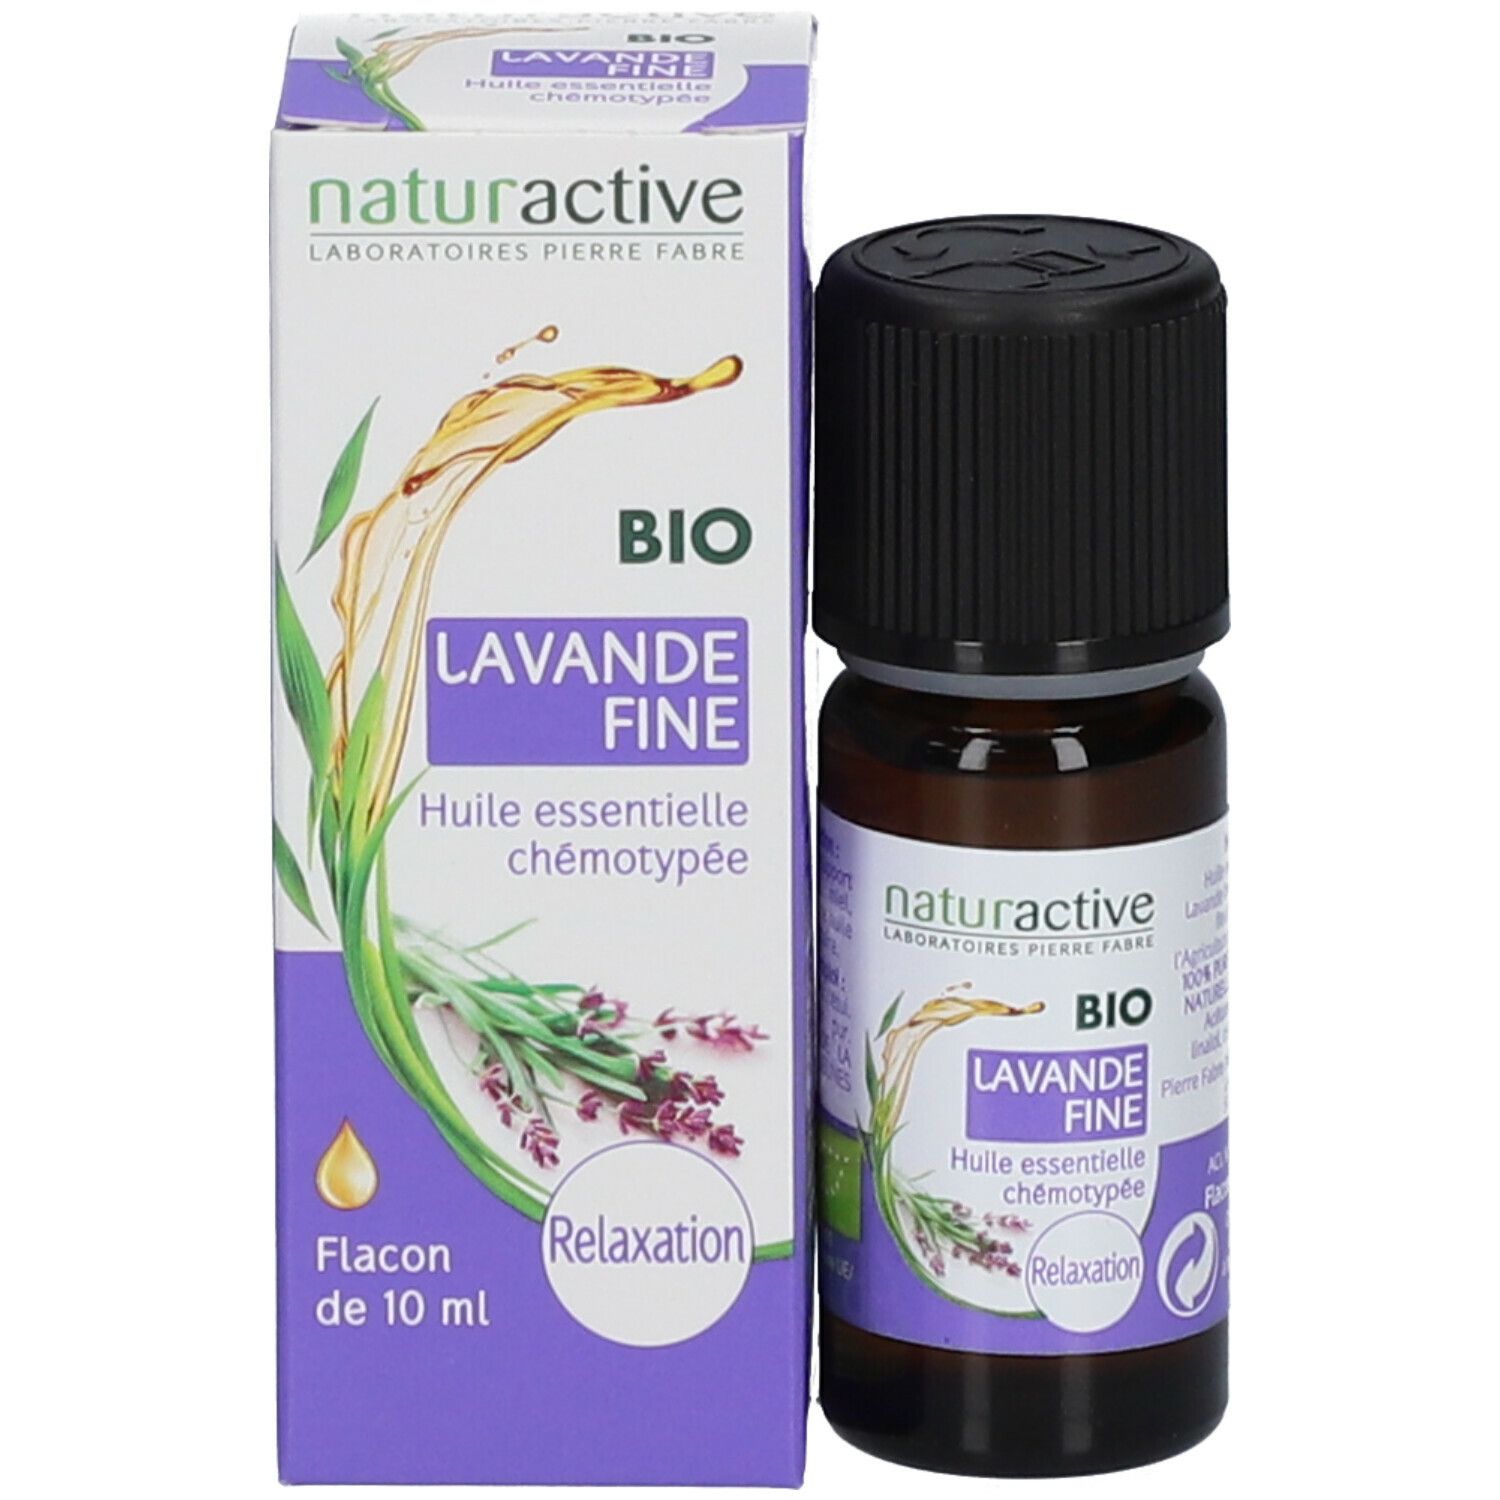 naturactive Lavande fine Huile essentielle BIO 10 ml - Redcare Pharmacie